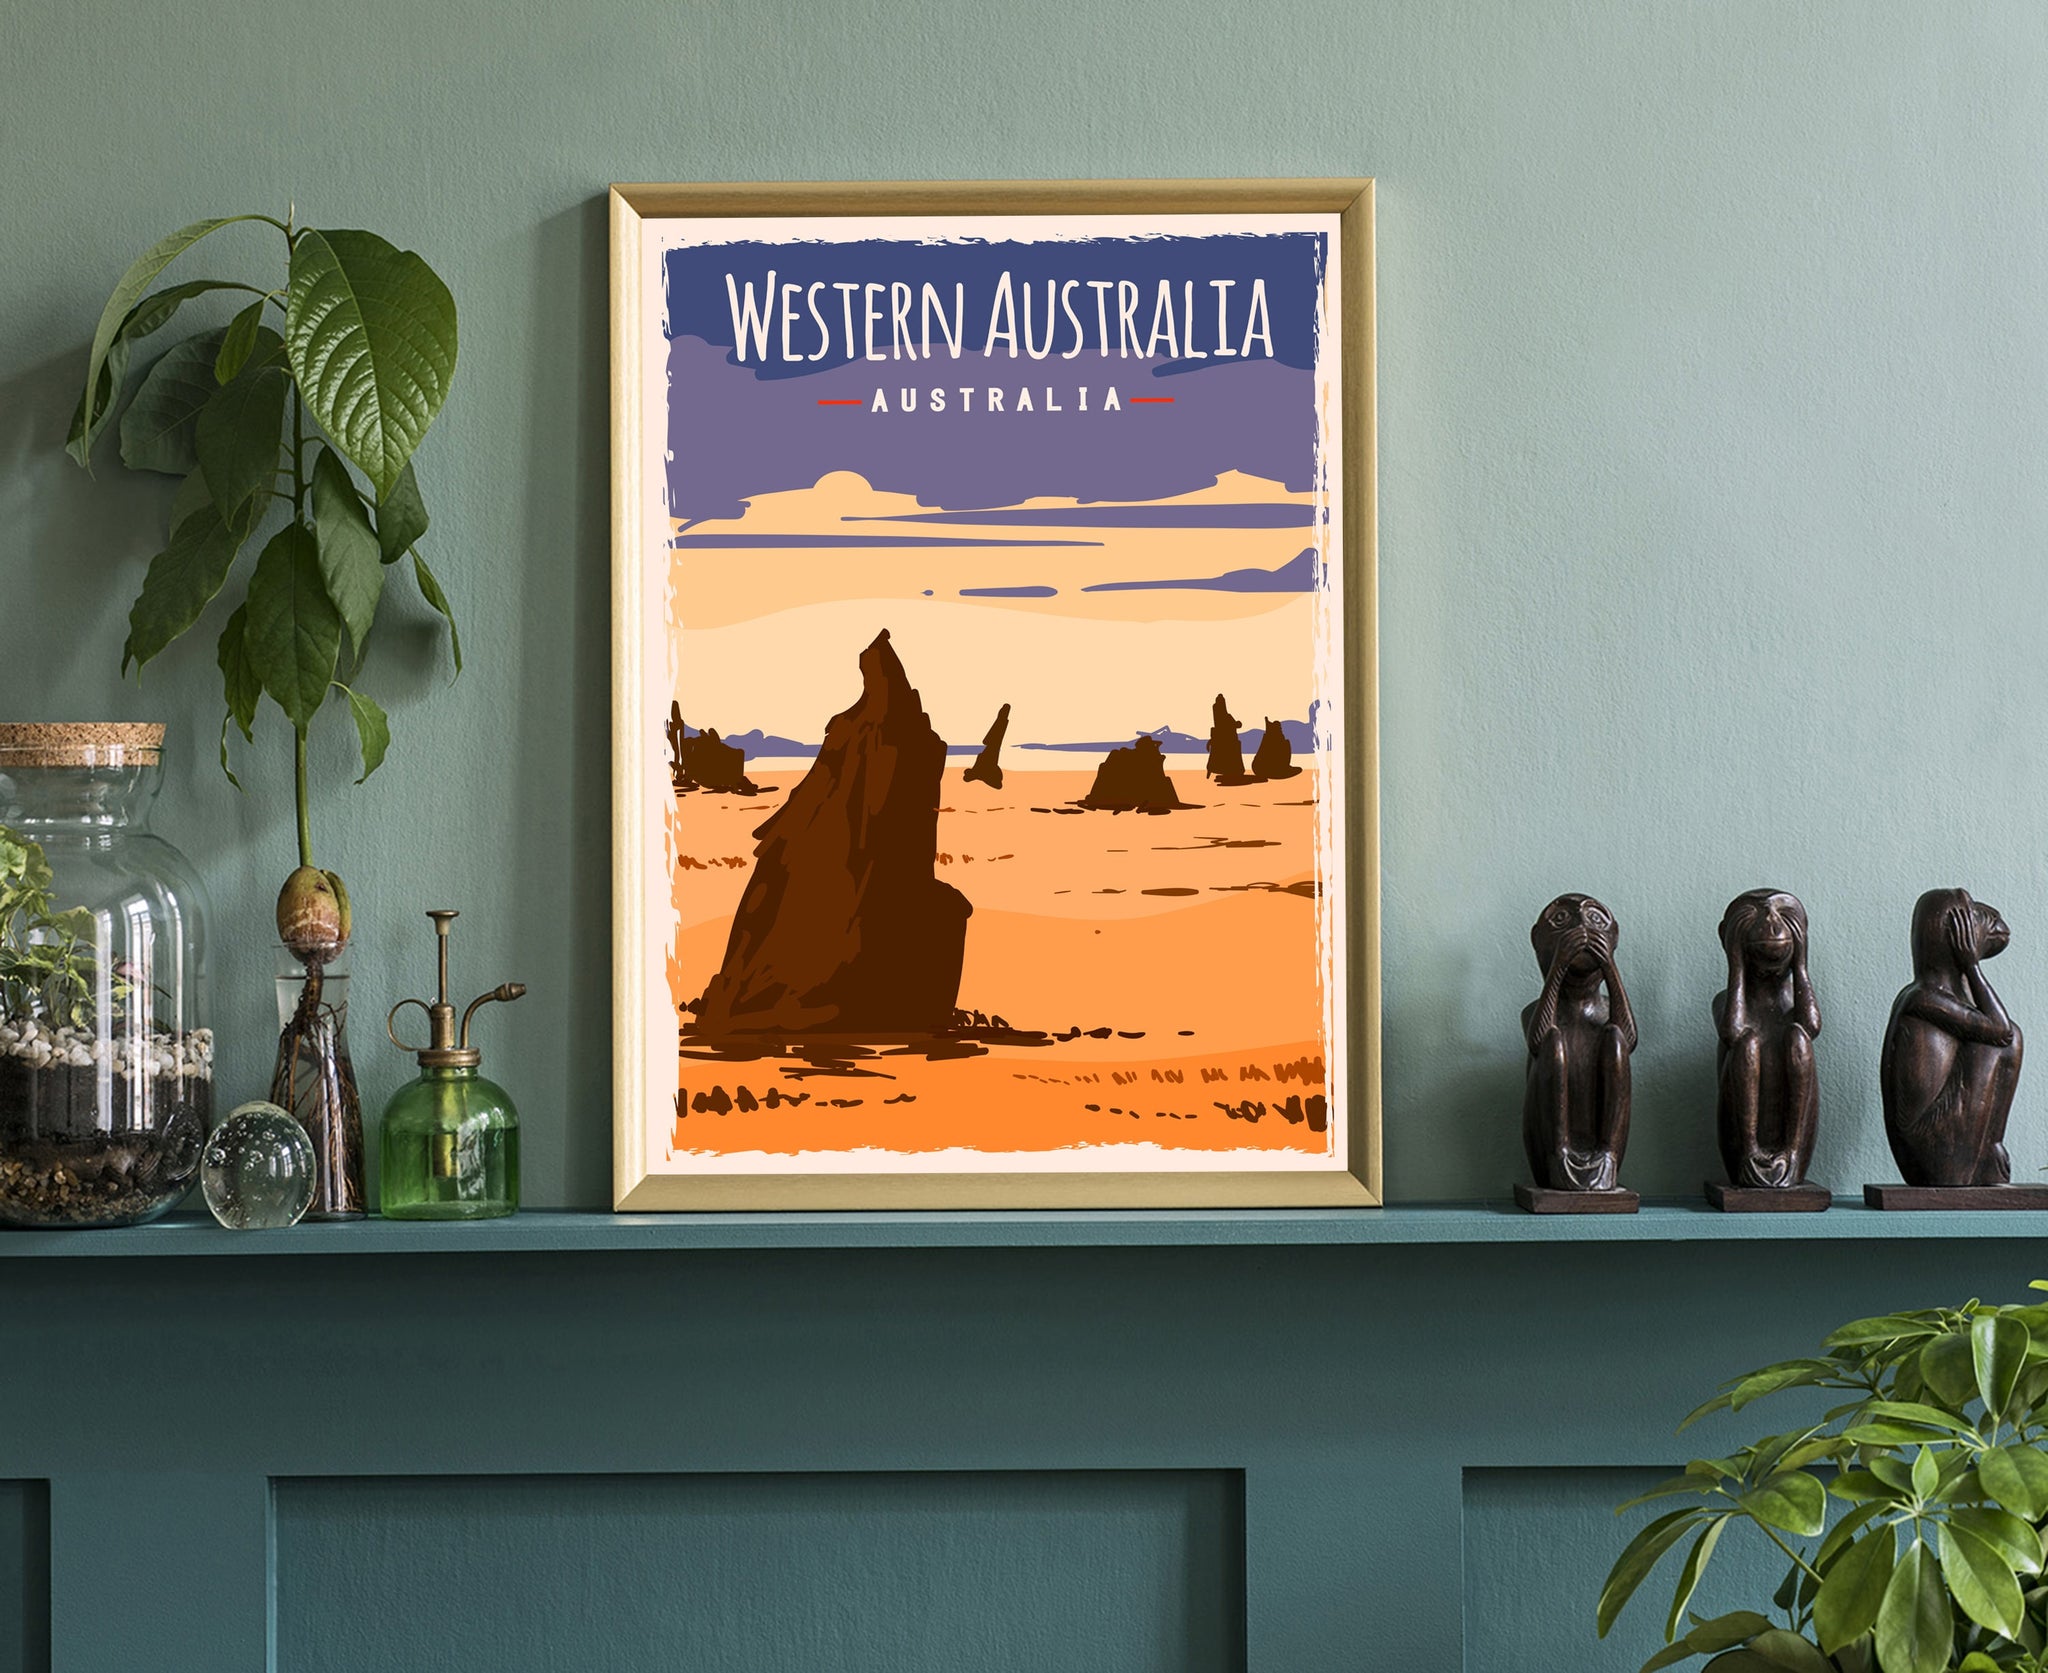 WESTERN AUSTRALIA travel poster, Australia cityscape poster art, Australia landmark poster wall art, Home wall art, Office wall decoration